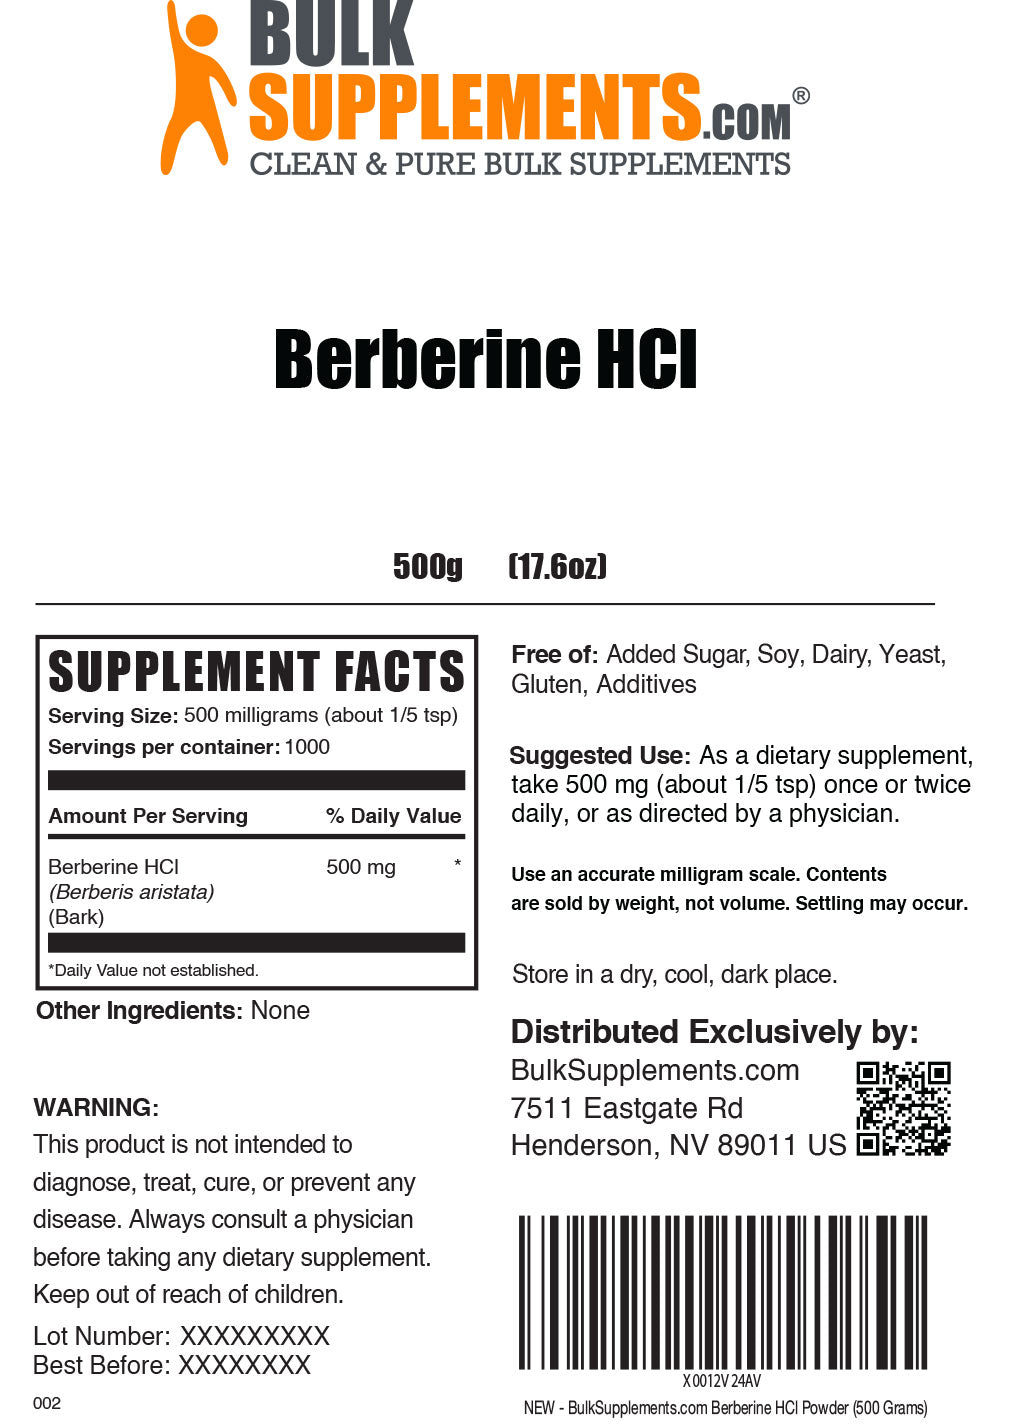 Berberine HCl Supplement Facts 500g bag